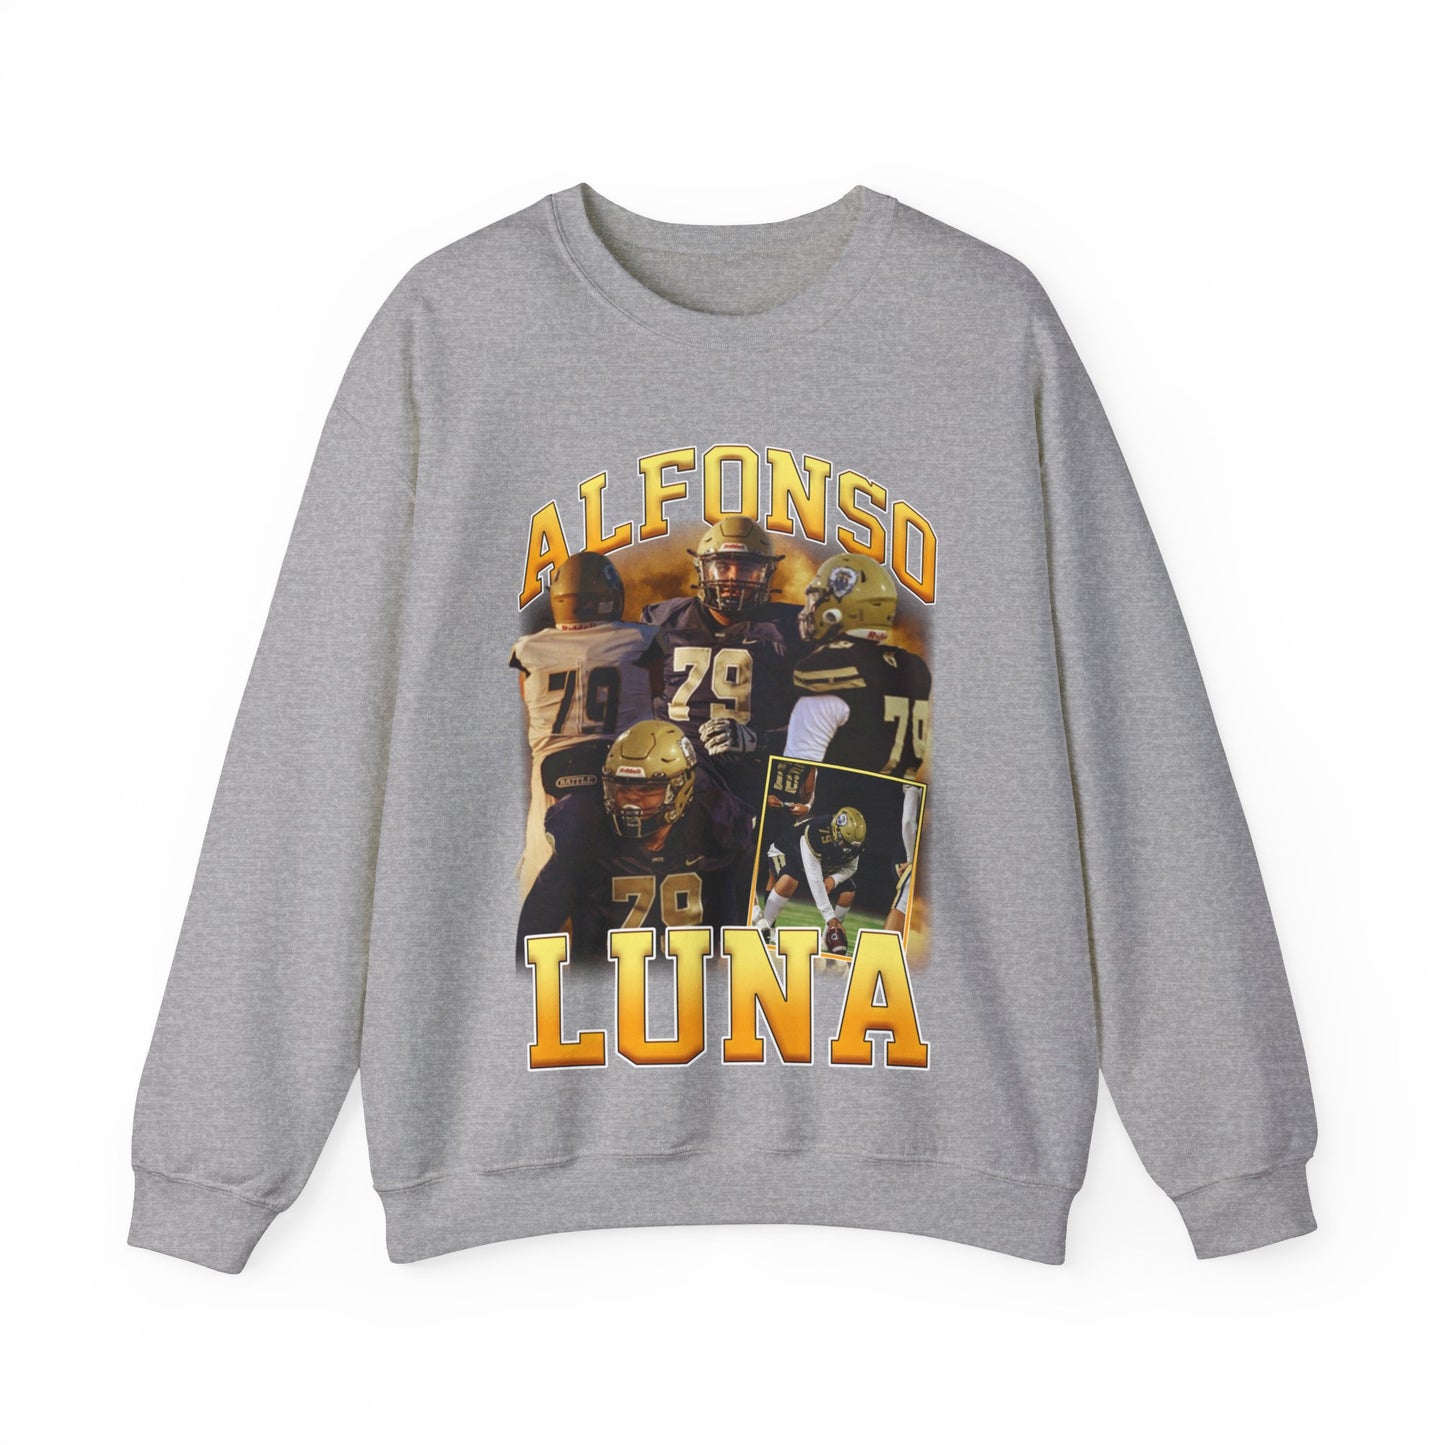 Alfonso Luna Crewneck Sweatshirt